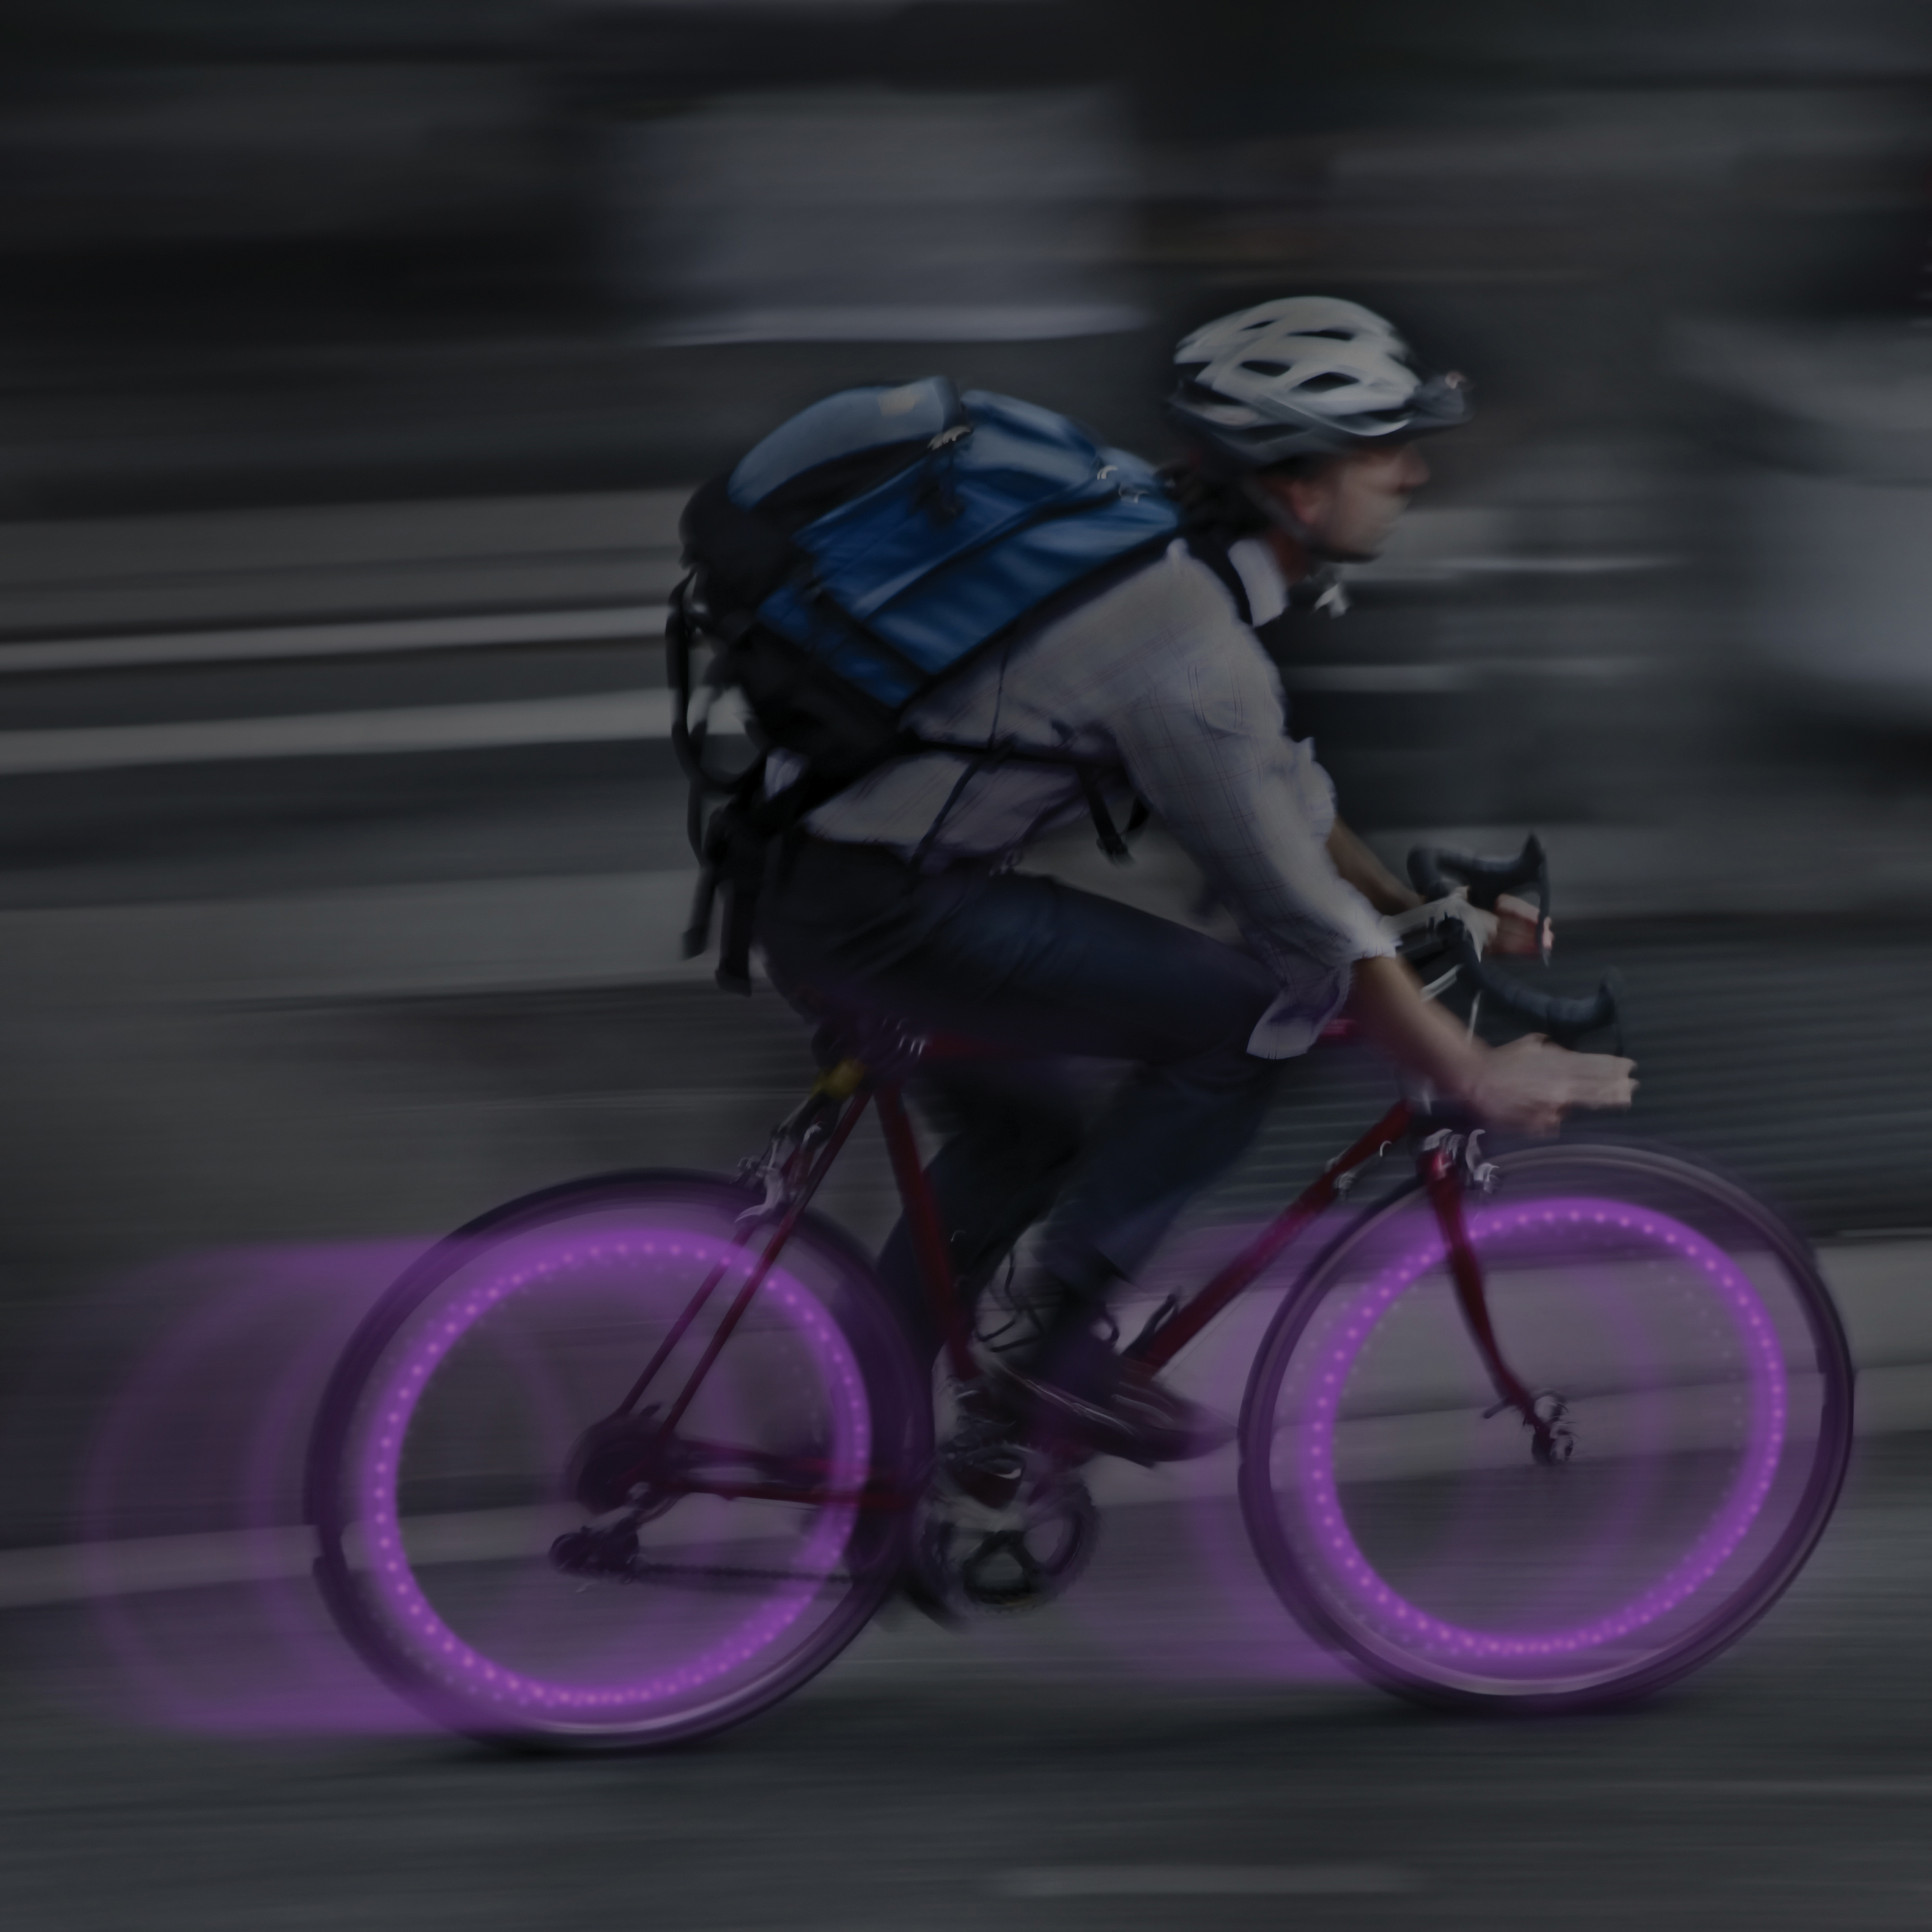 Nite Ize See 'Em Mini LED Bicycle Spoke Lights, Wheel Lights For Nighttime Visibility + Safety, 2 Pack, Purple - image 3 of 7